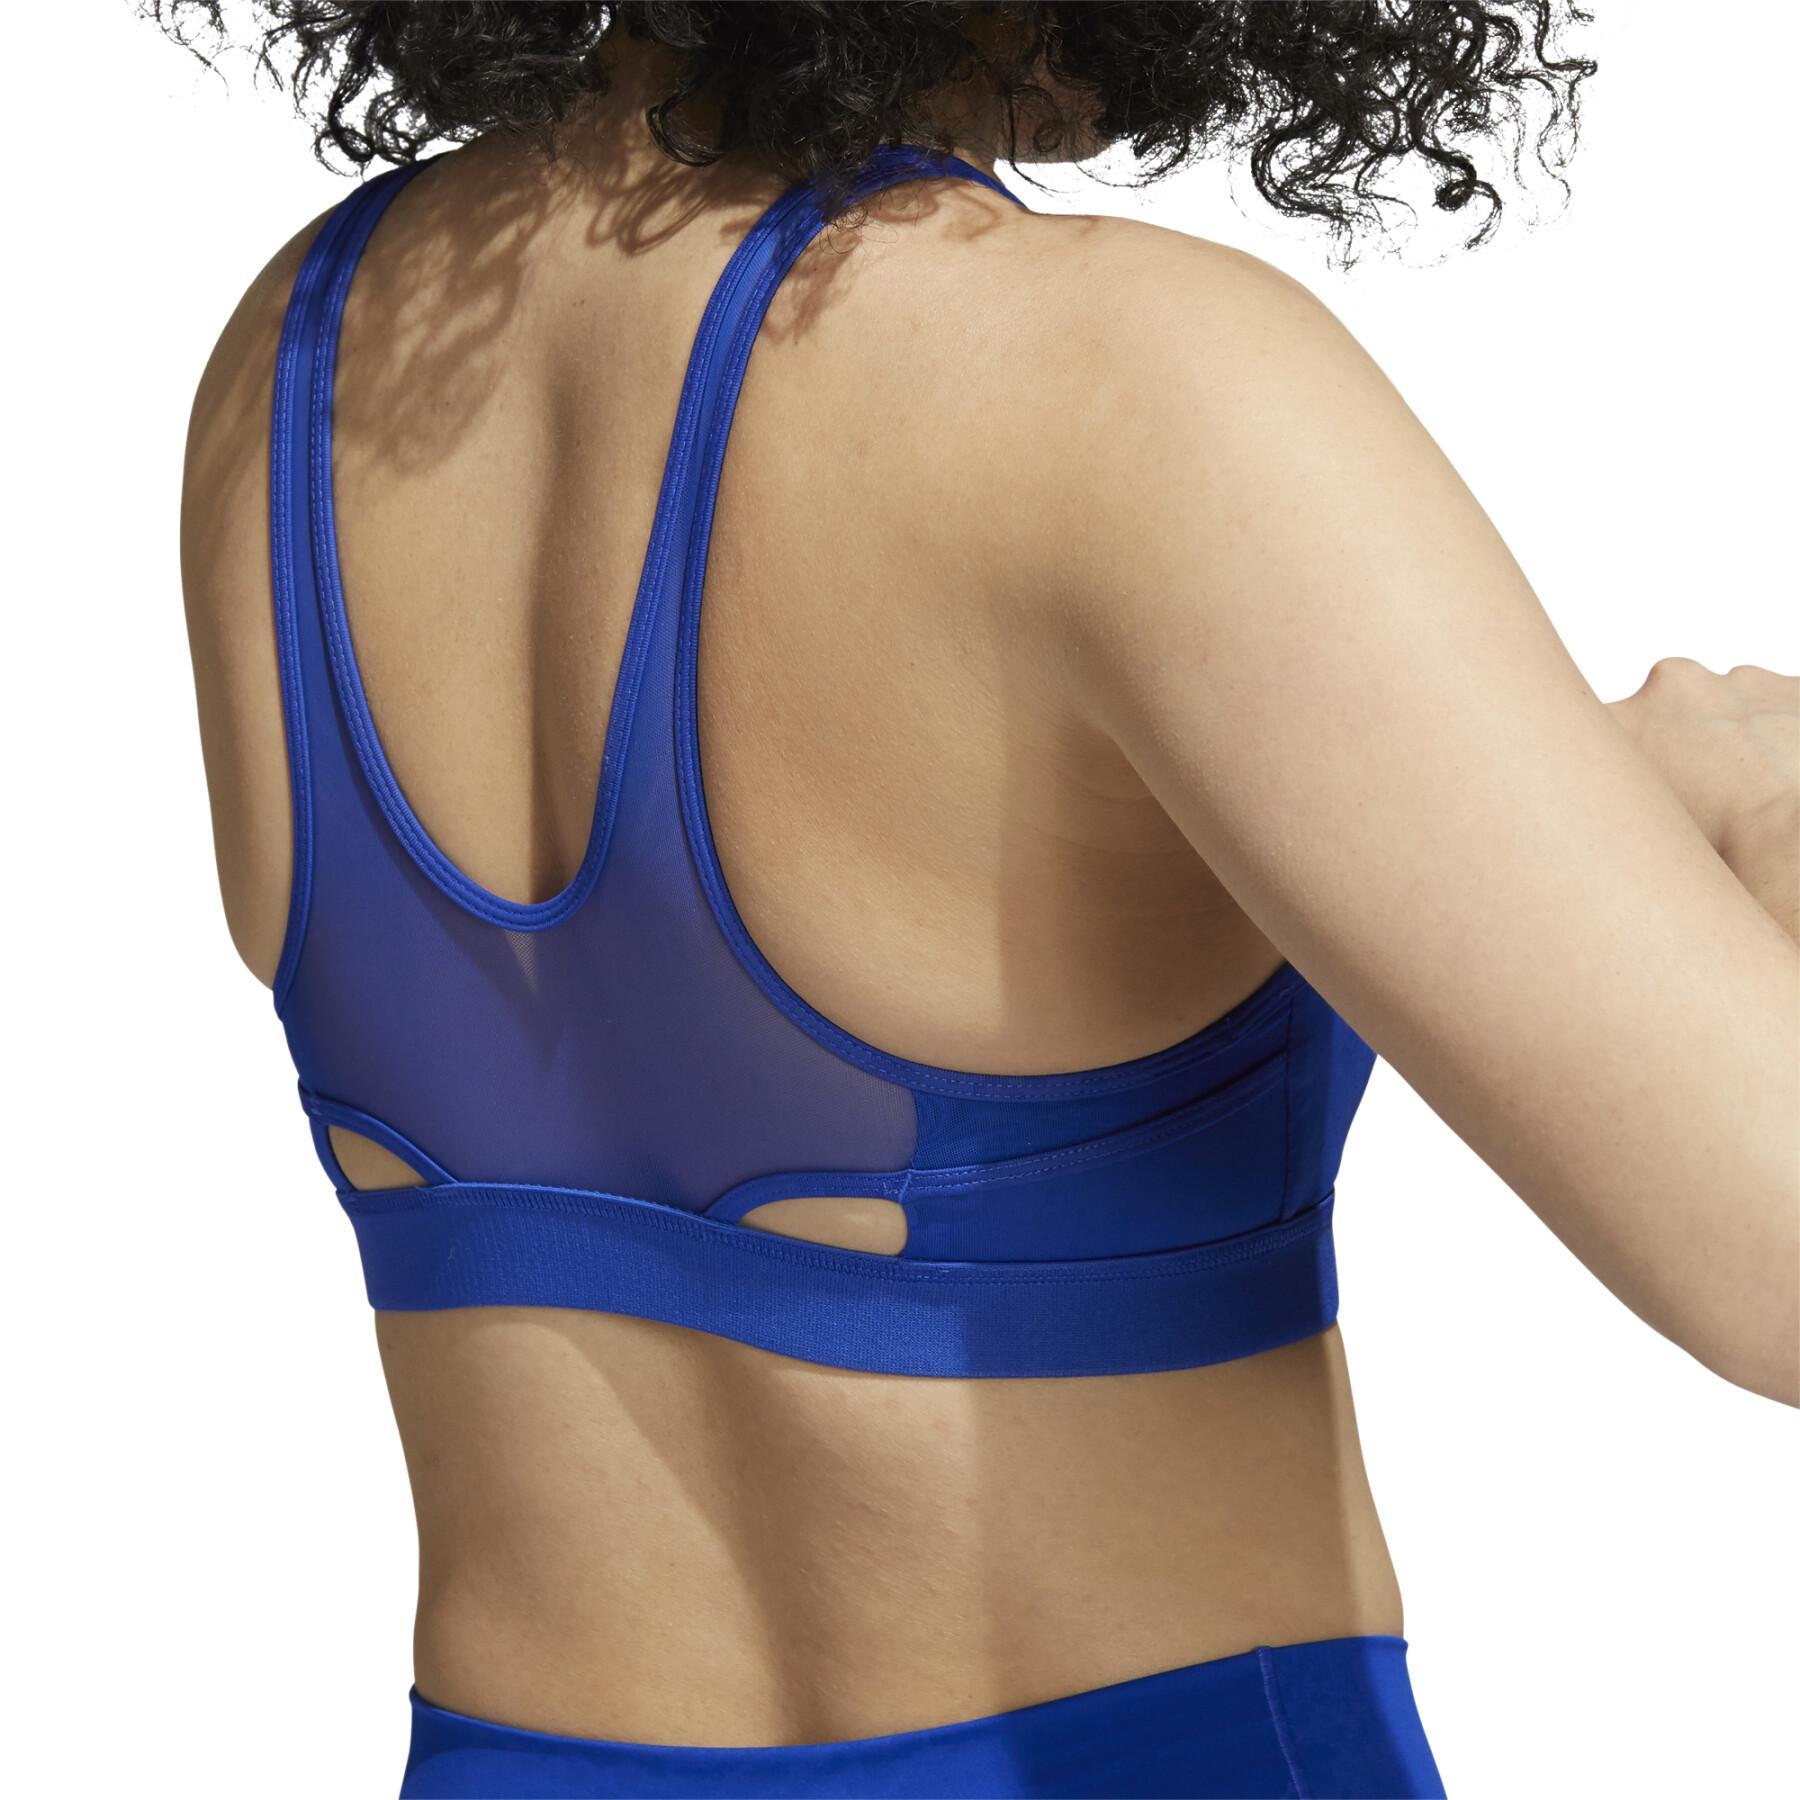 Biustonosz damski adidas Believe This Medium-Support Lace Camo Workout